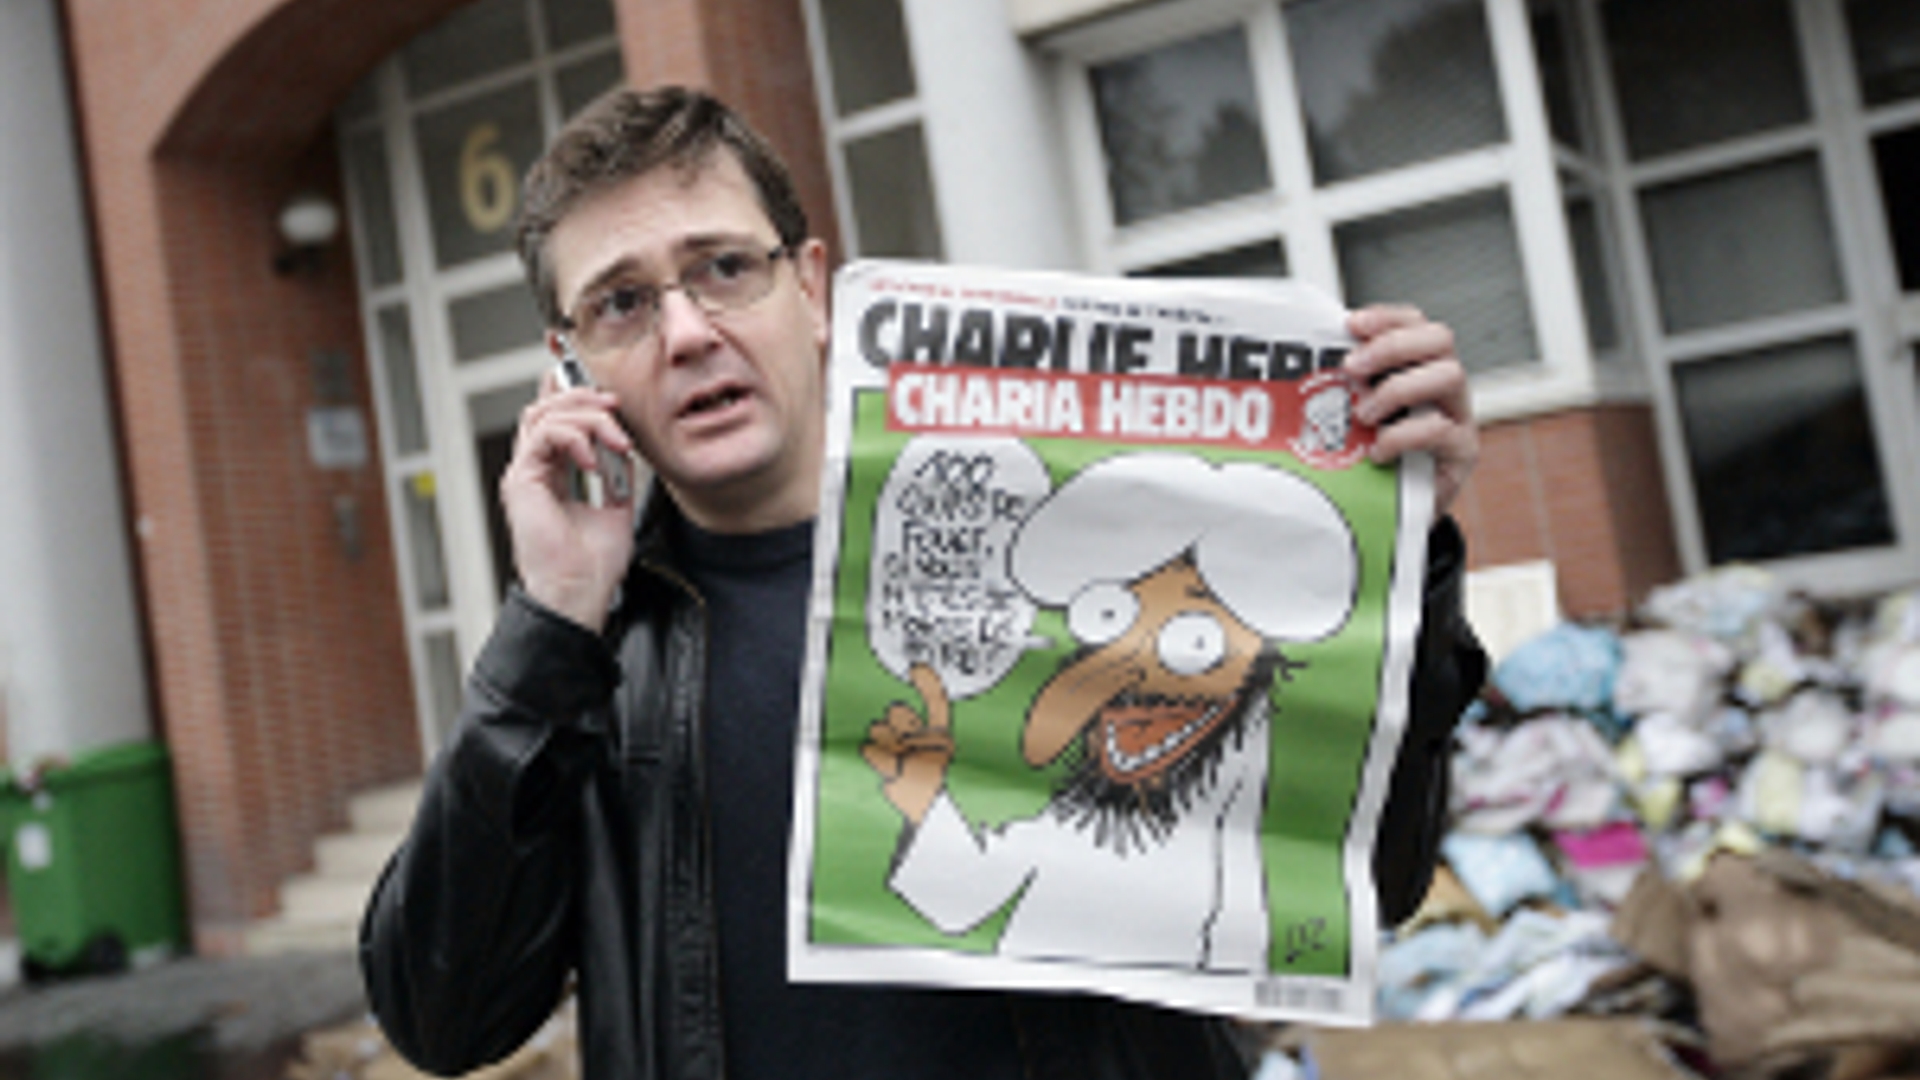 ANP-CharlieHebdo_300.jpg